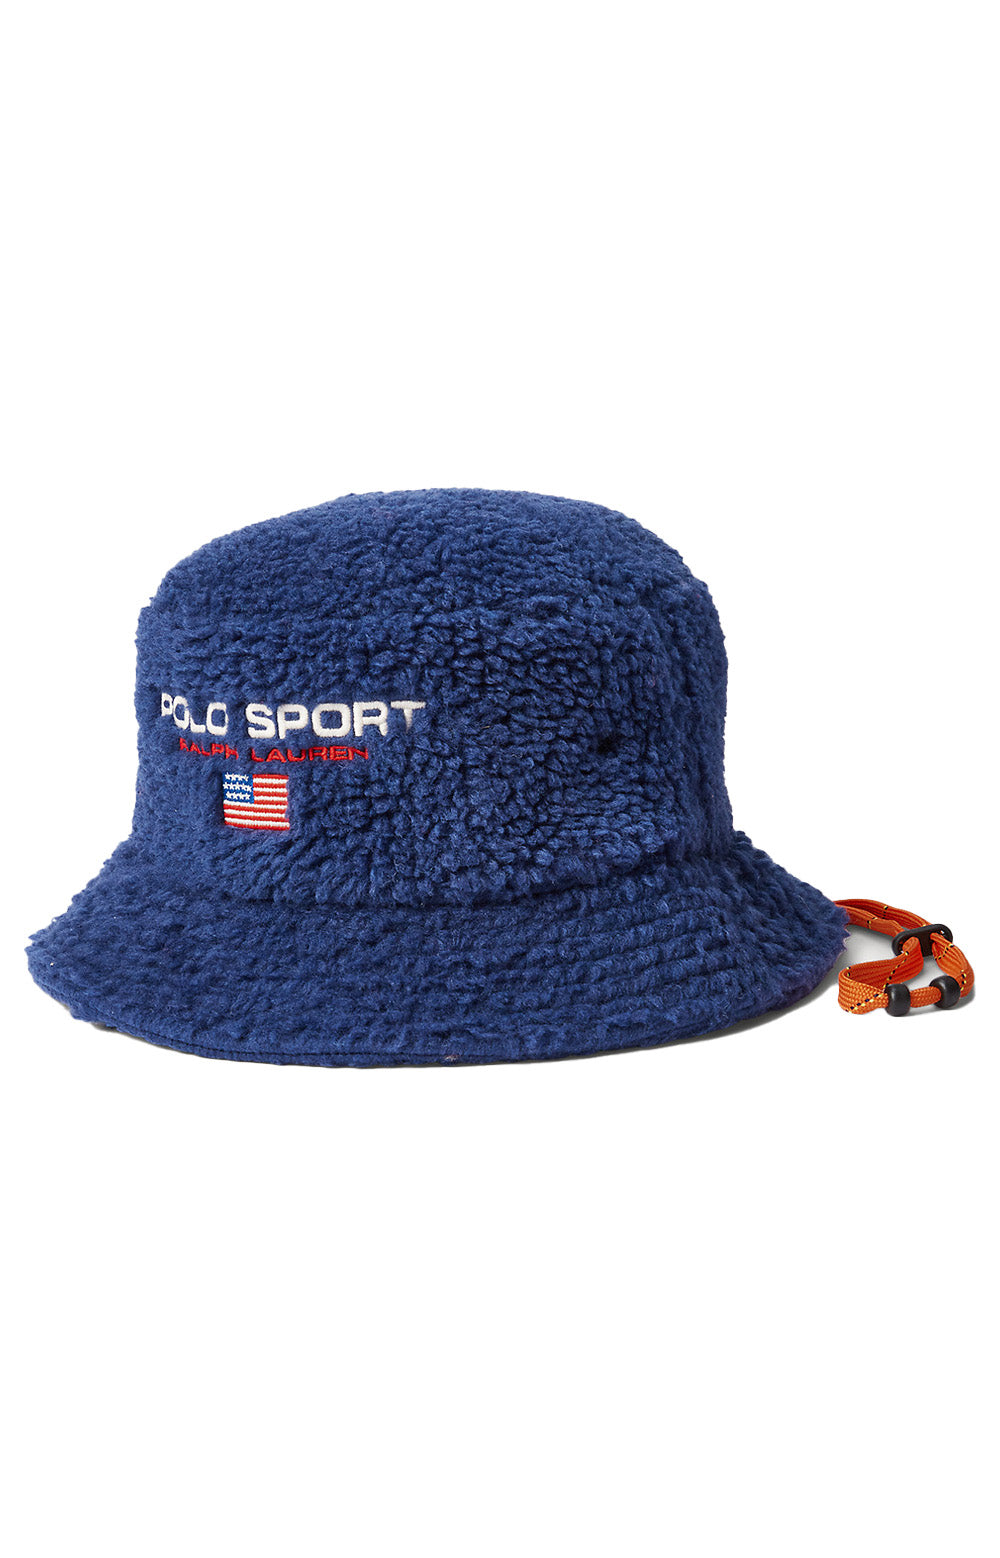 Polo Sport Ralph Lauren Sportsman Fishing Boonie/bucket Hat